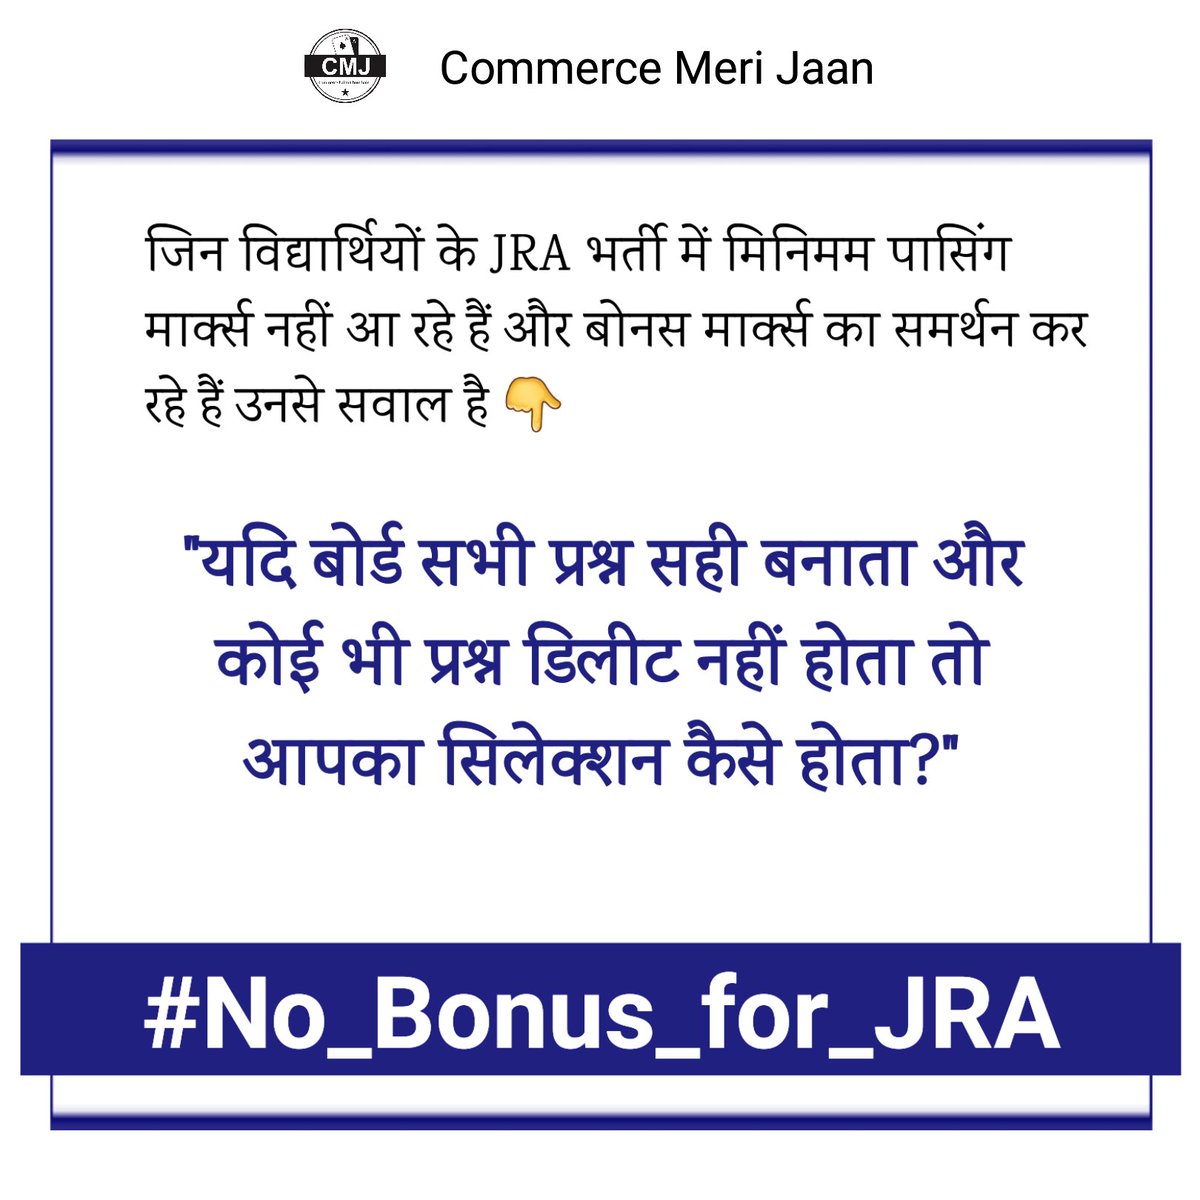 #No_Bonous_for_JRA 
#No_Bonus_for_JRA_